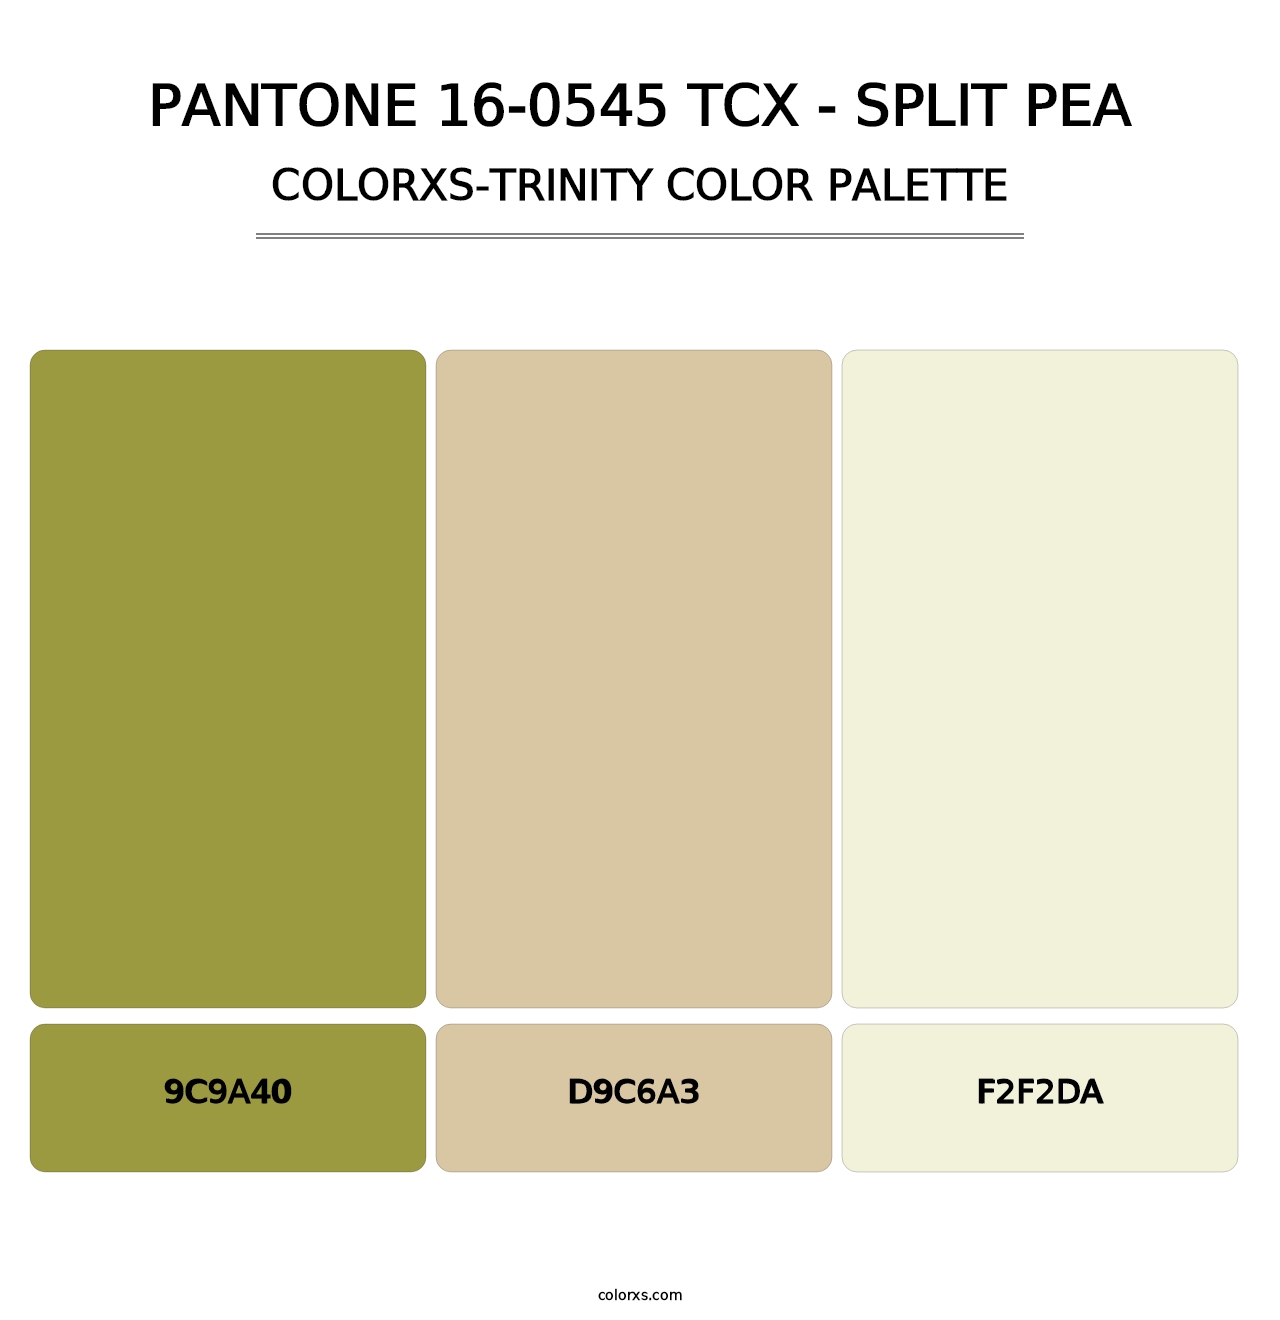 PANTONE 16-0545 TCX - Split Pea - Colorxs Trinity Palette